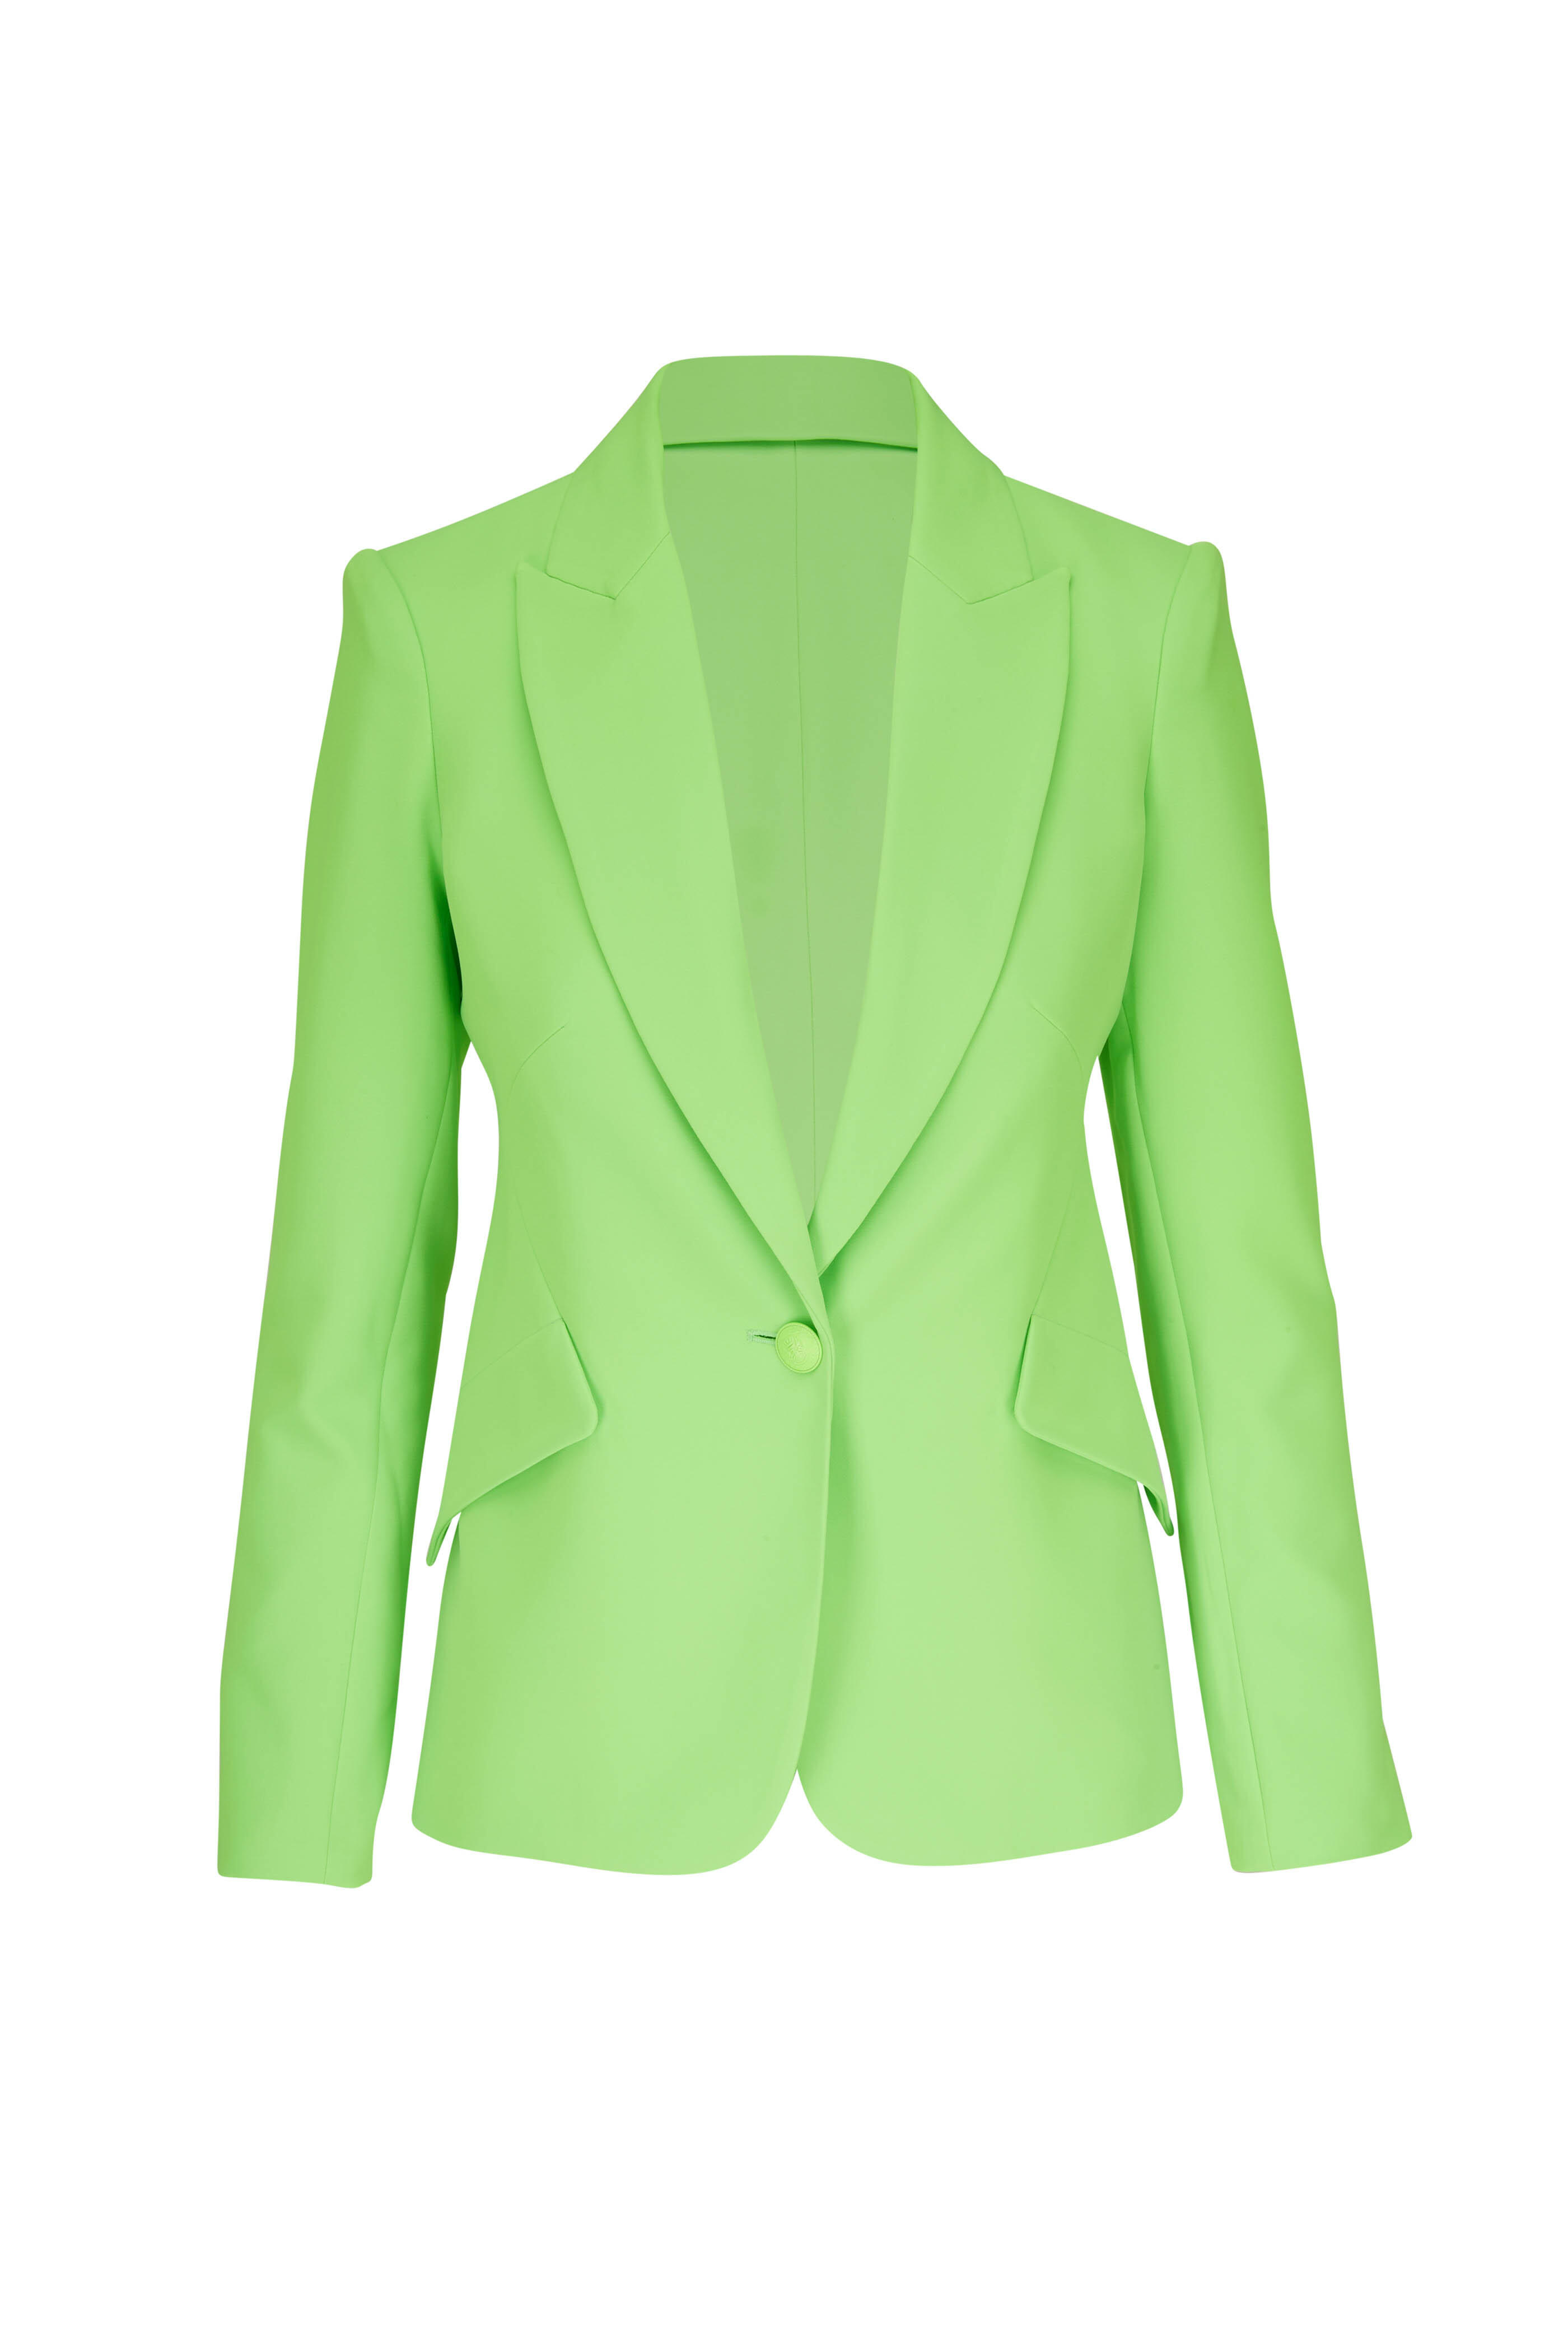 L'Agence - Chamberlain Lime Green Blazer